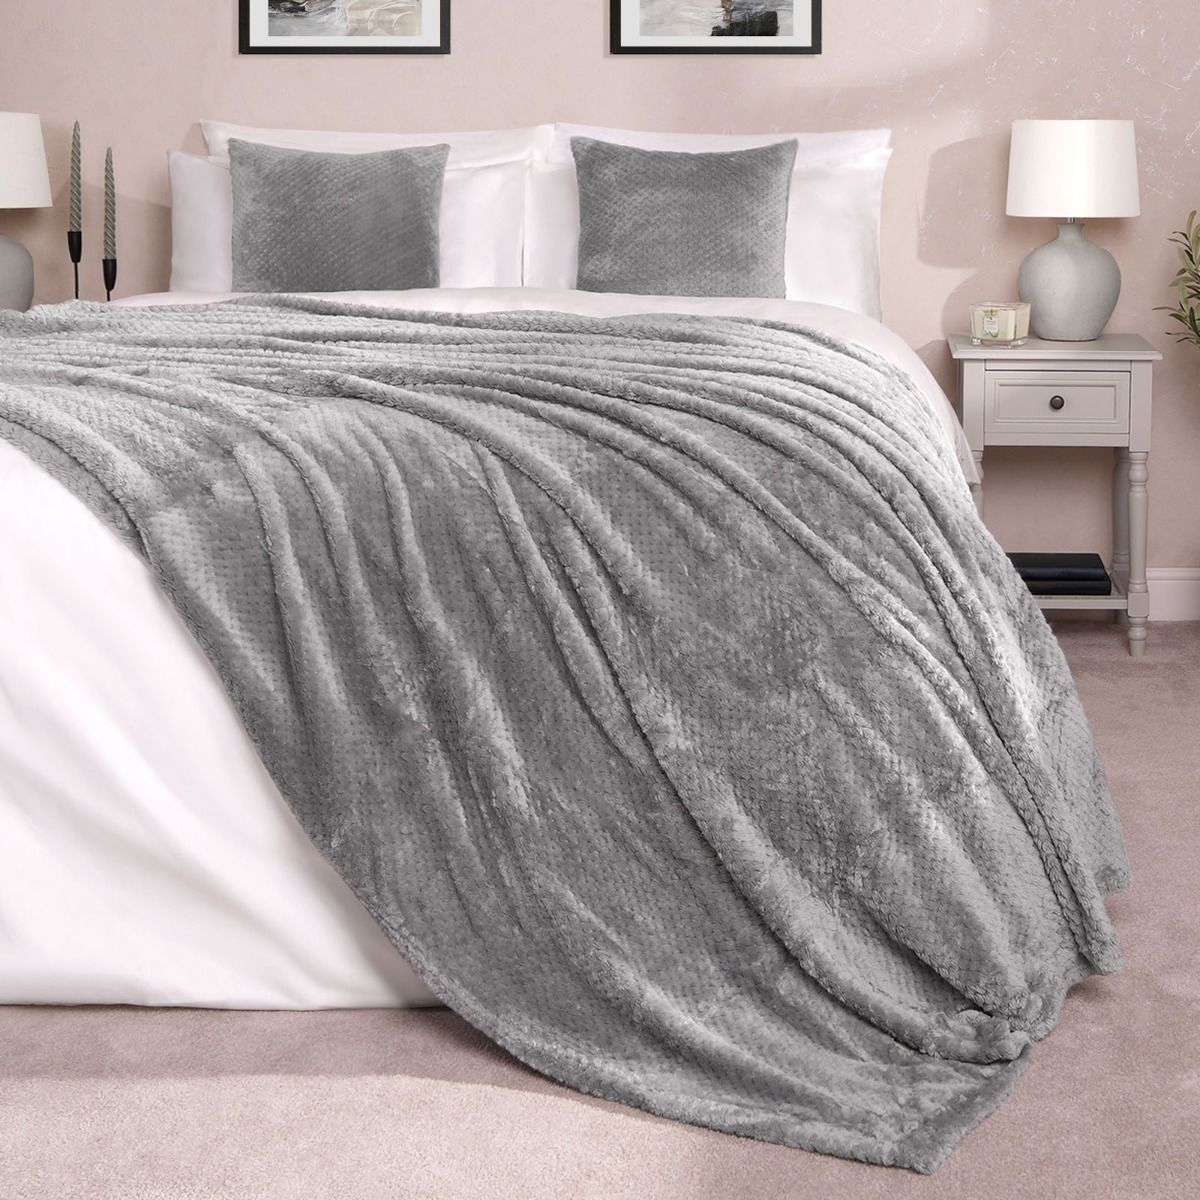 Luxury Waffle Mink Warm Throw Over Sofa Bed Soft Blanket 200 x 240cm Charcoal